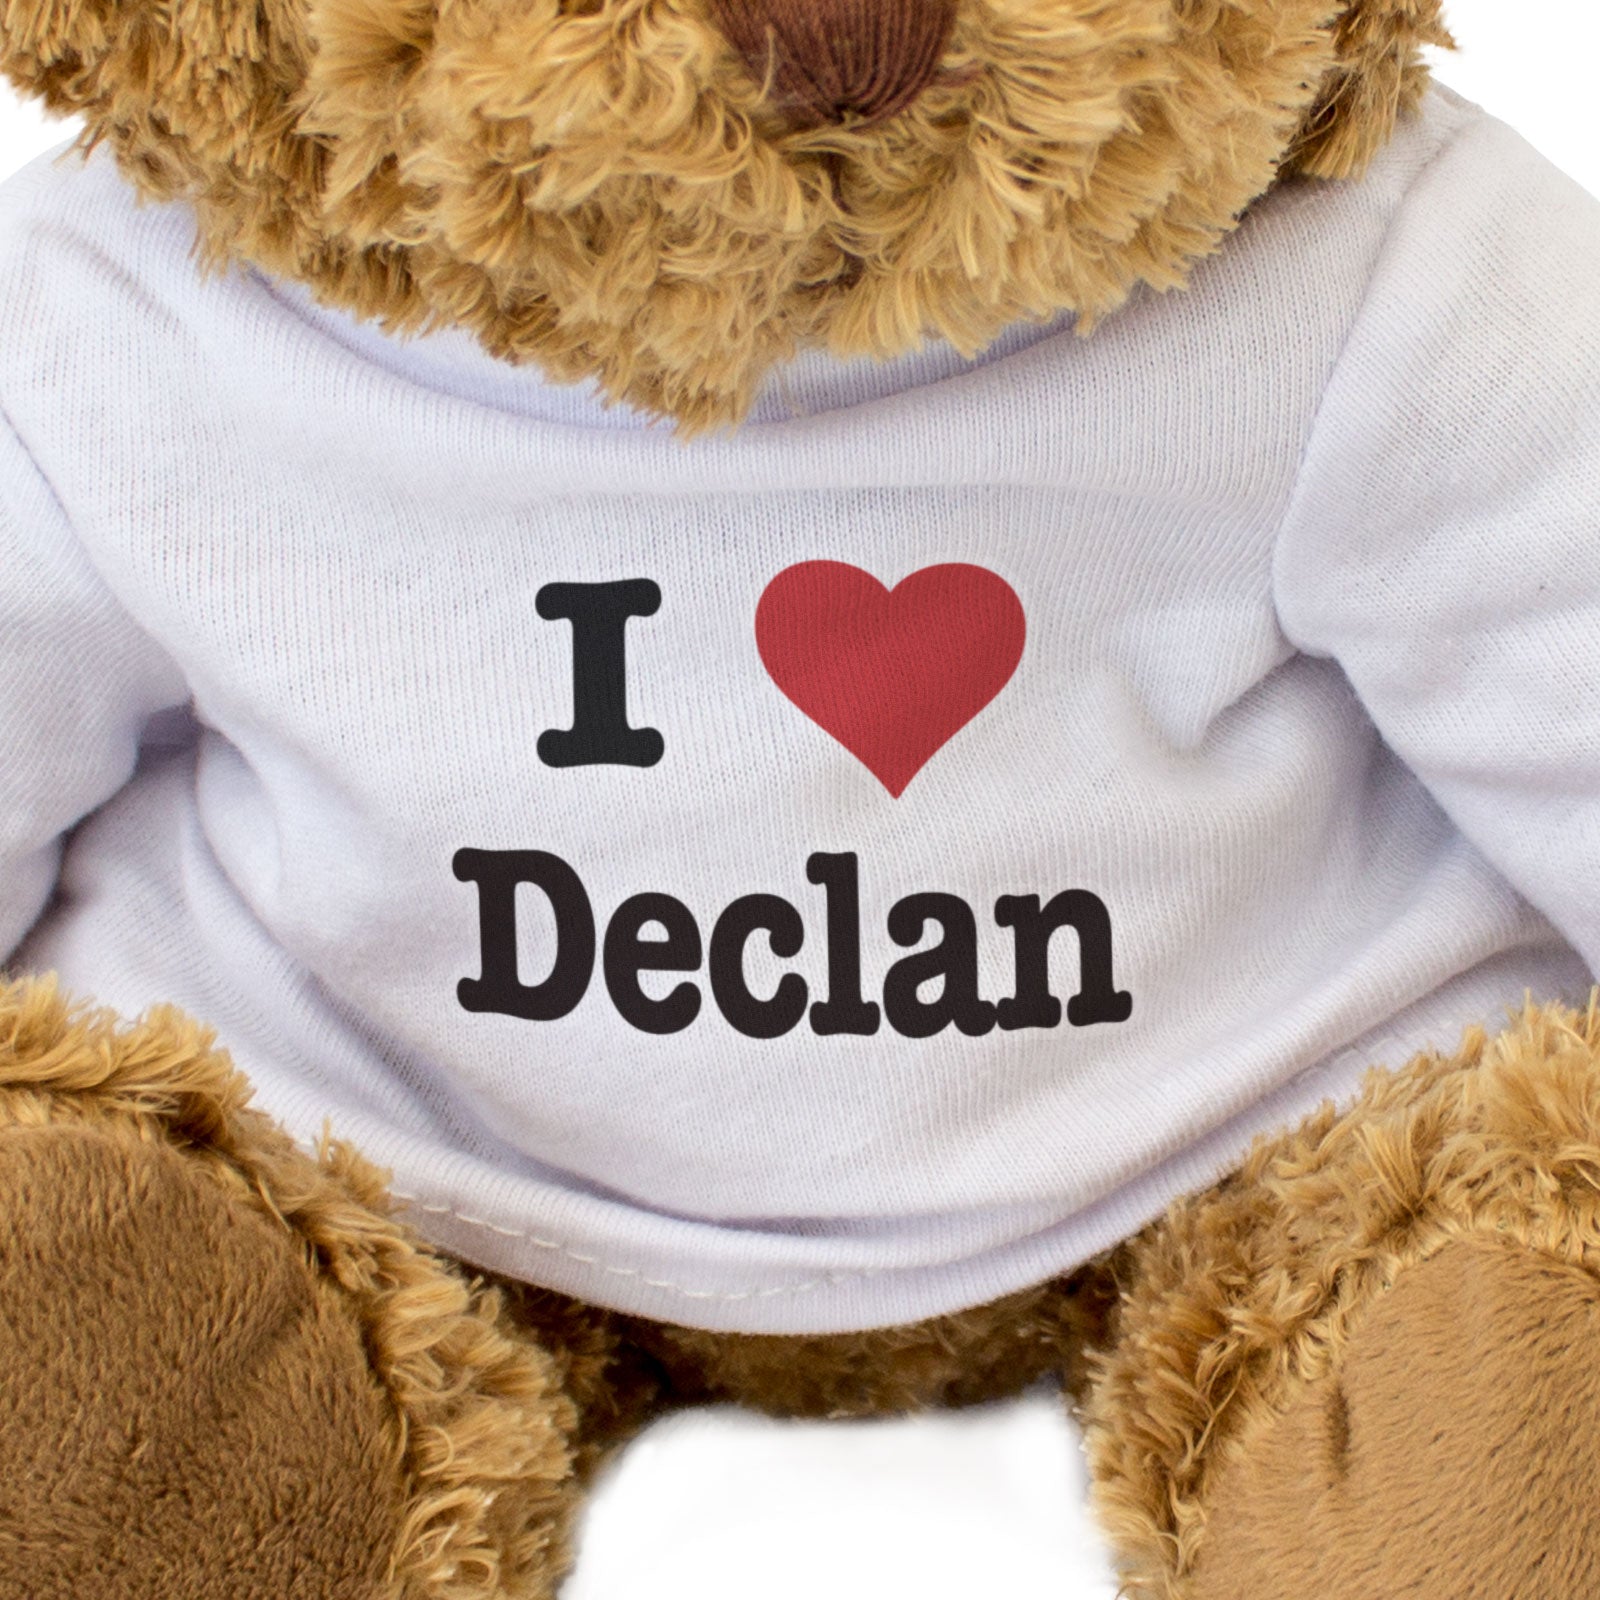 I Love Declan - Teddy Bear